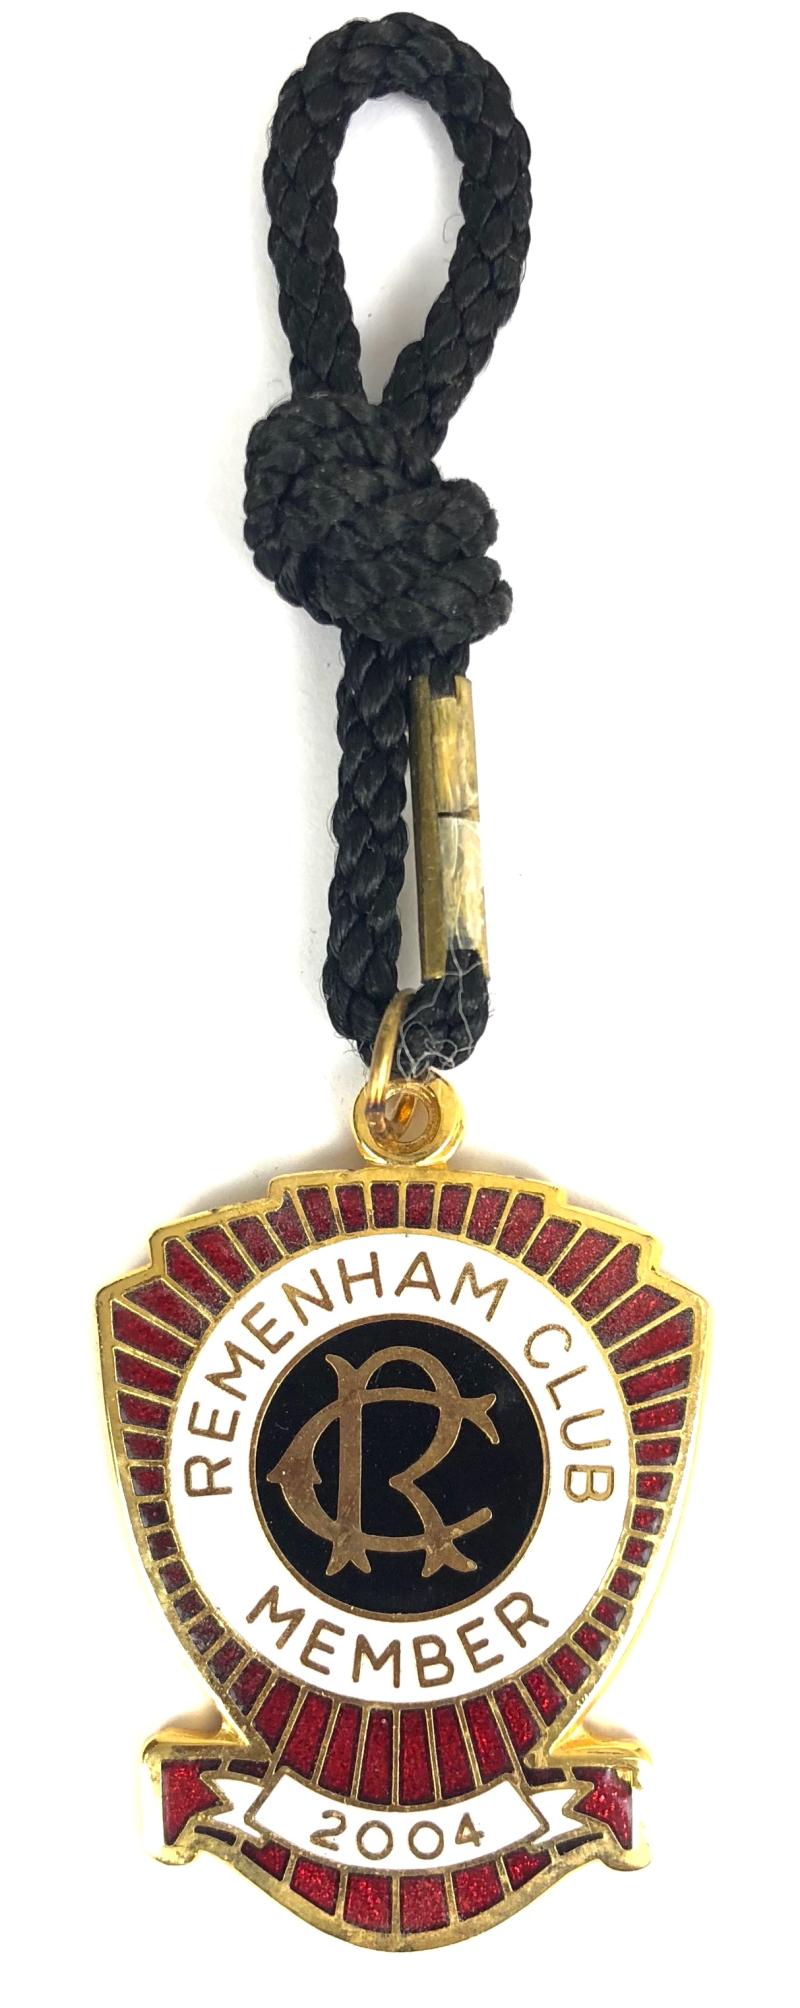 2004 Remenham Rowing Club badge Henley Royal Regatta